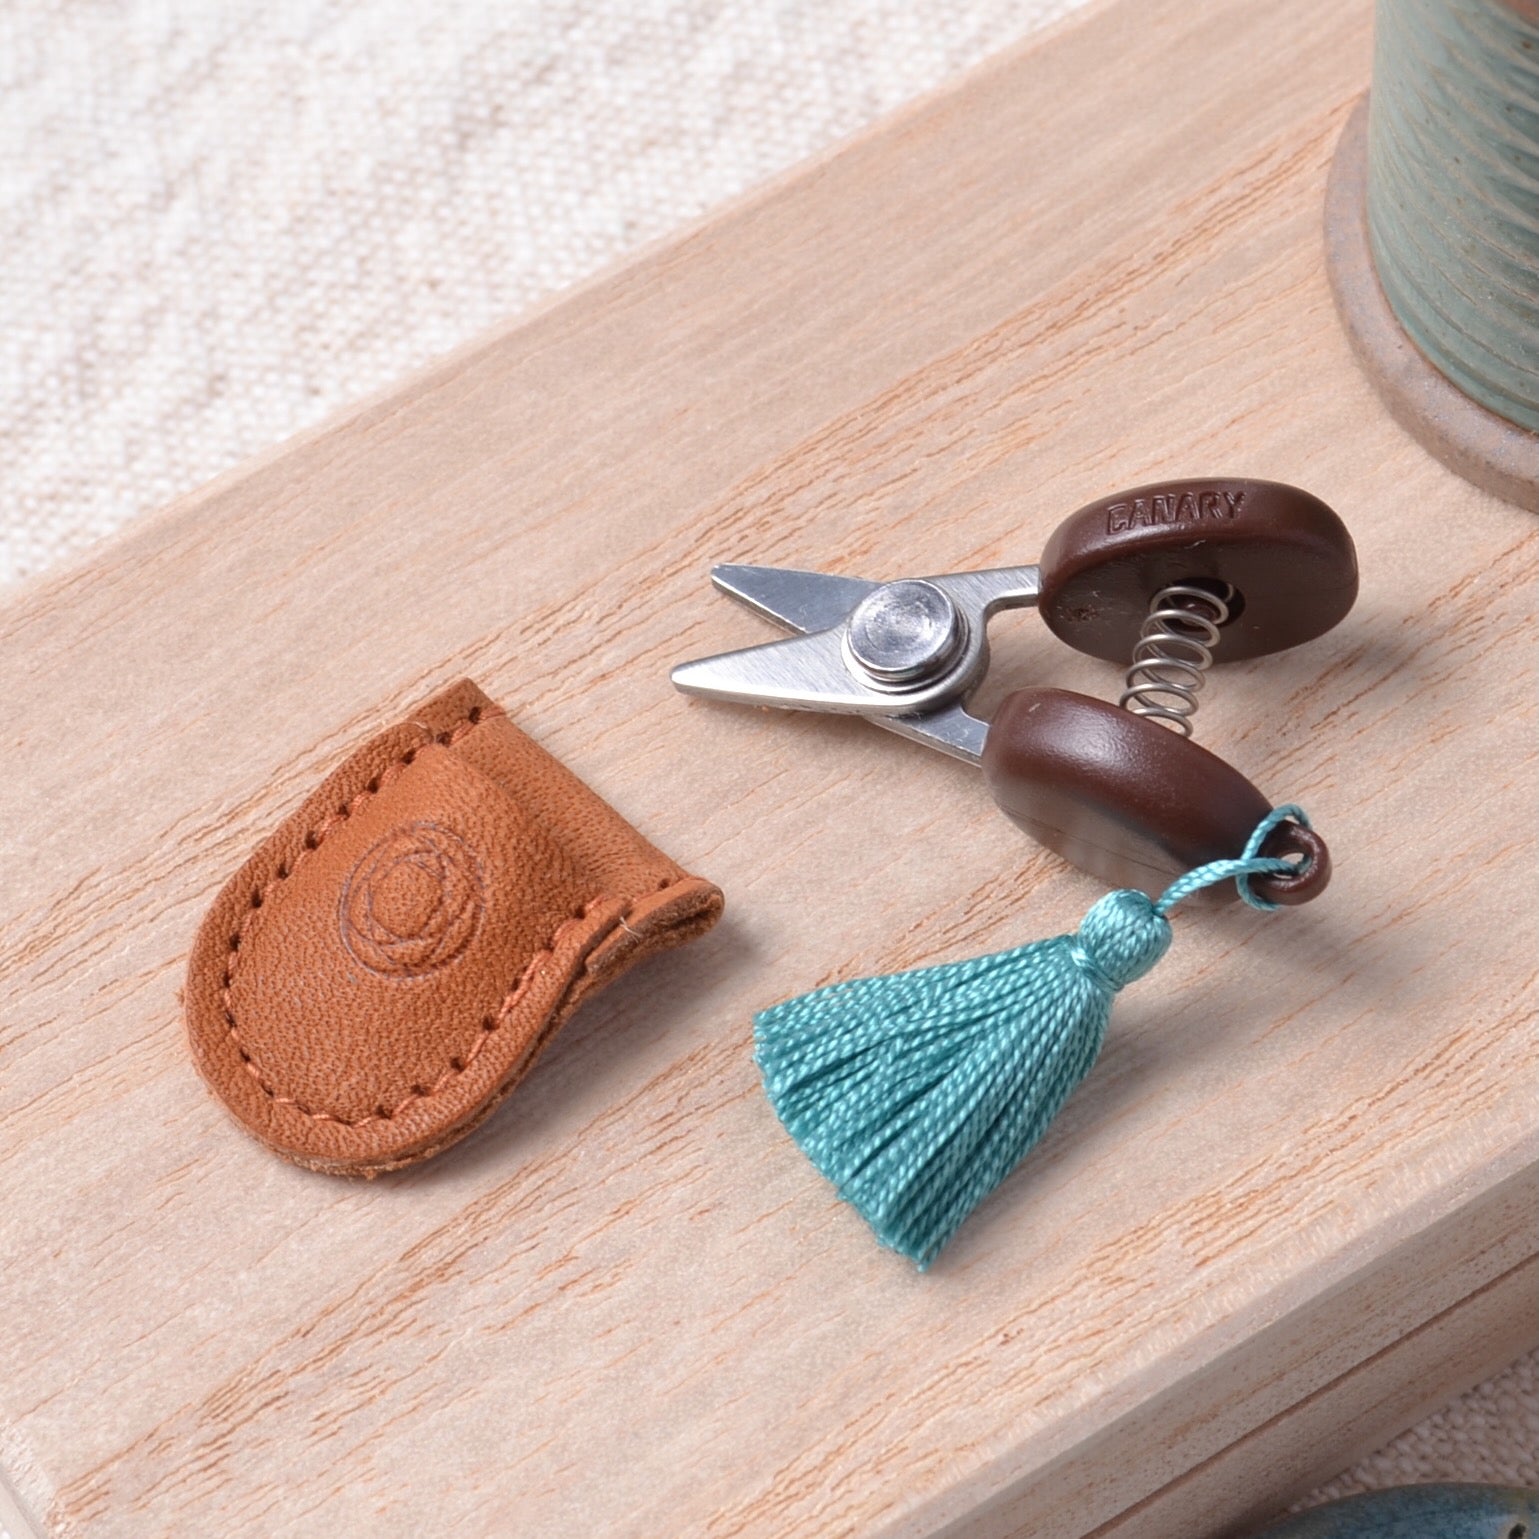 Cohana mini scissor with leather sheath